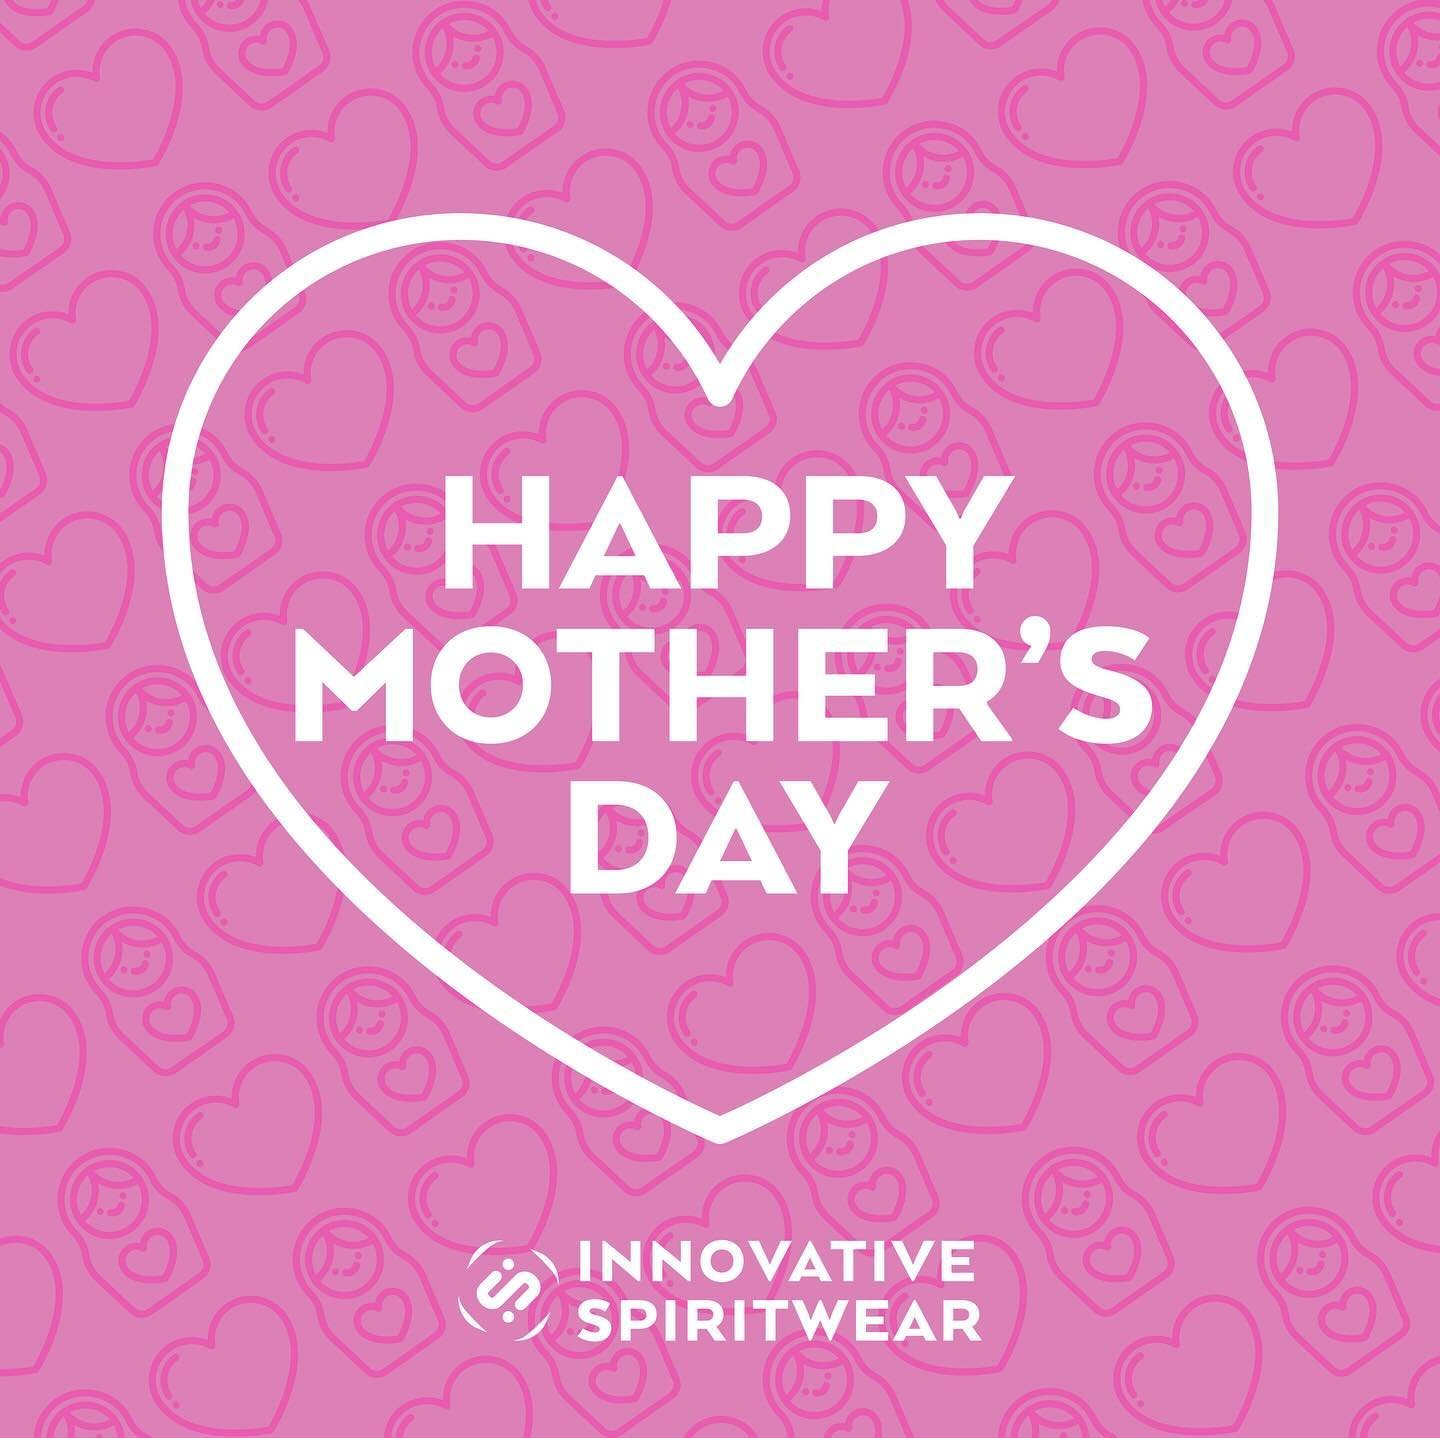 Happy Mother&rsquo;s Day! .
.
.
#thisISspiritwear #thisISallstar #cheer #allstarcheer #fashion #cheerleading #mom #mothersday